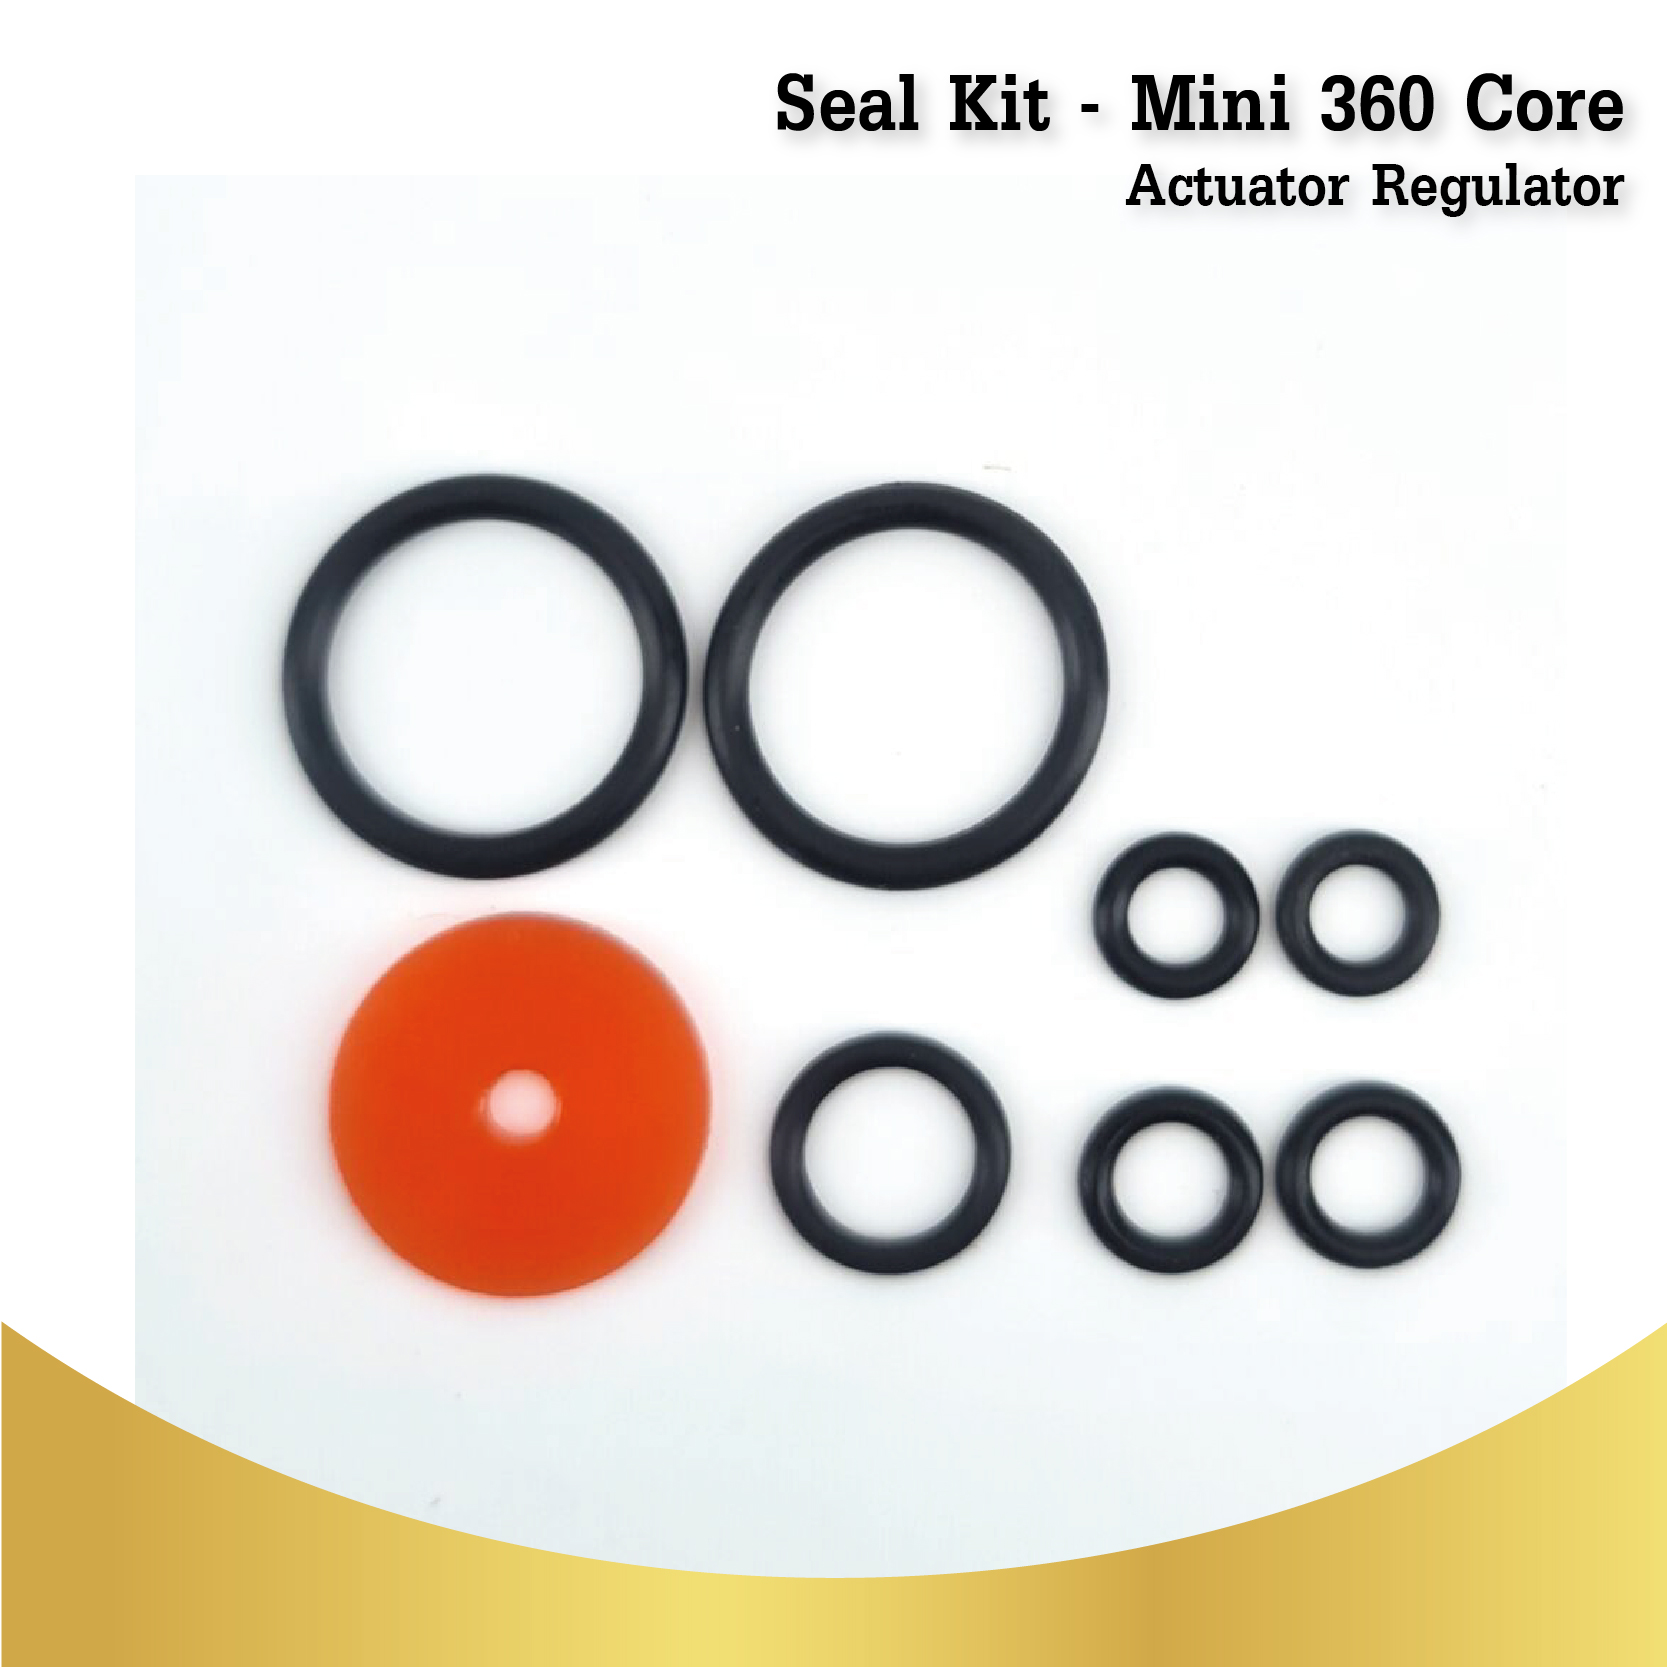 Seal Kit - Mini 360 Core Actuator Regulator